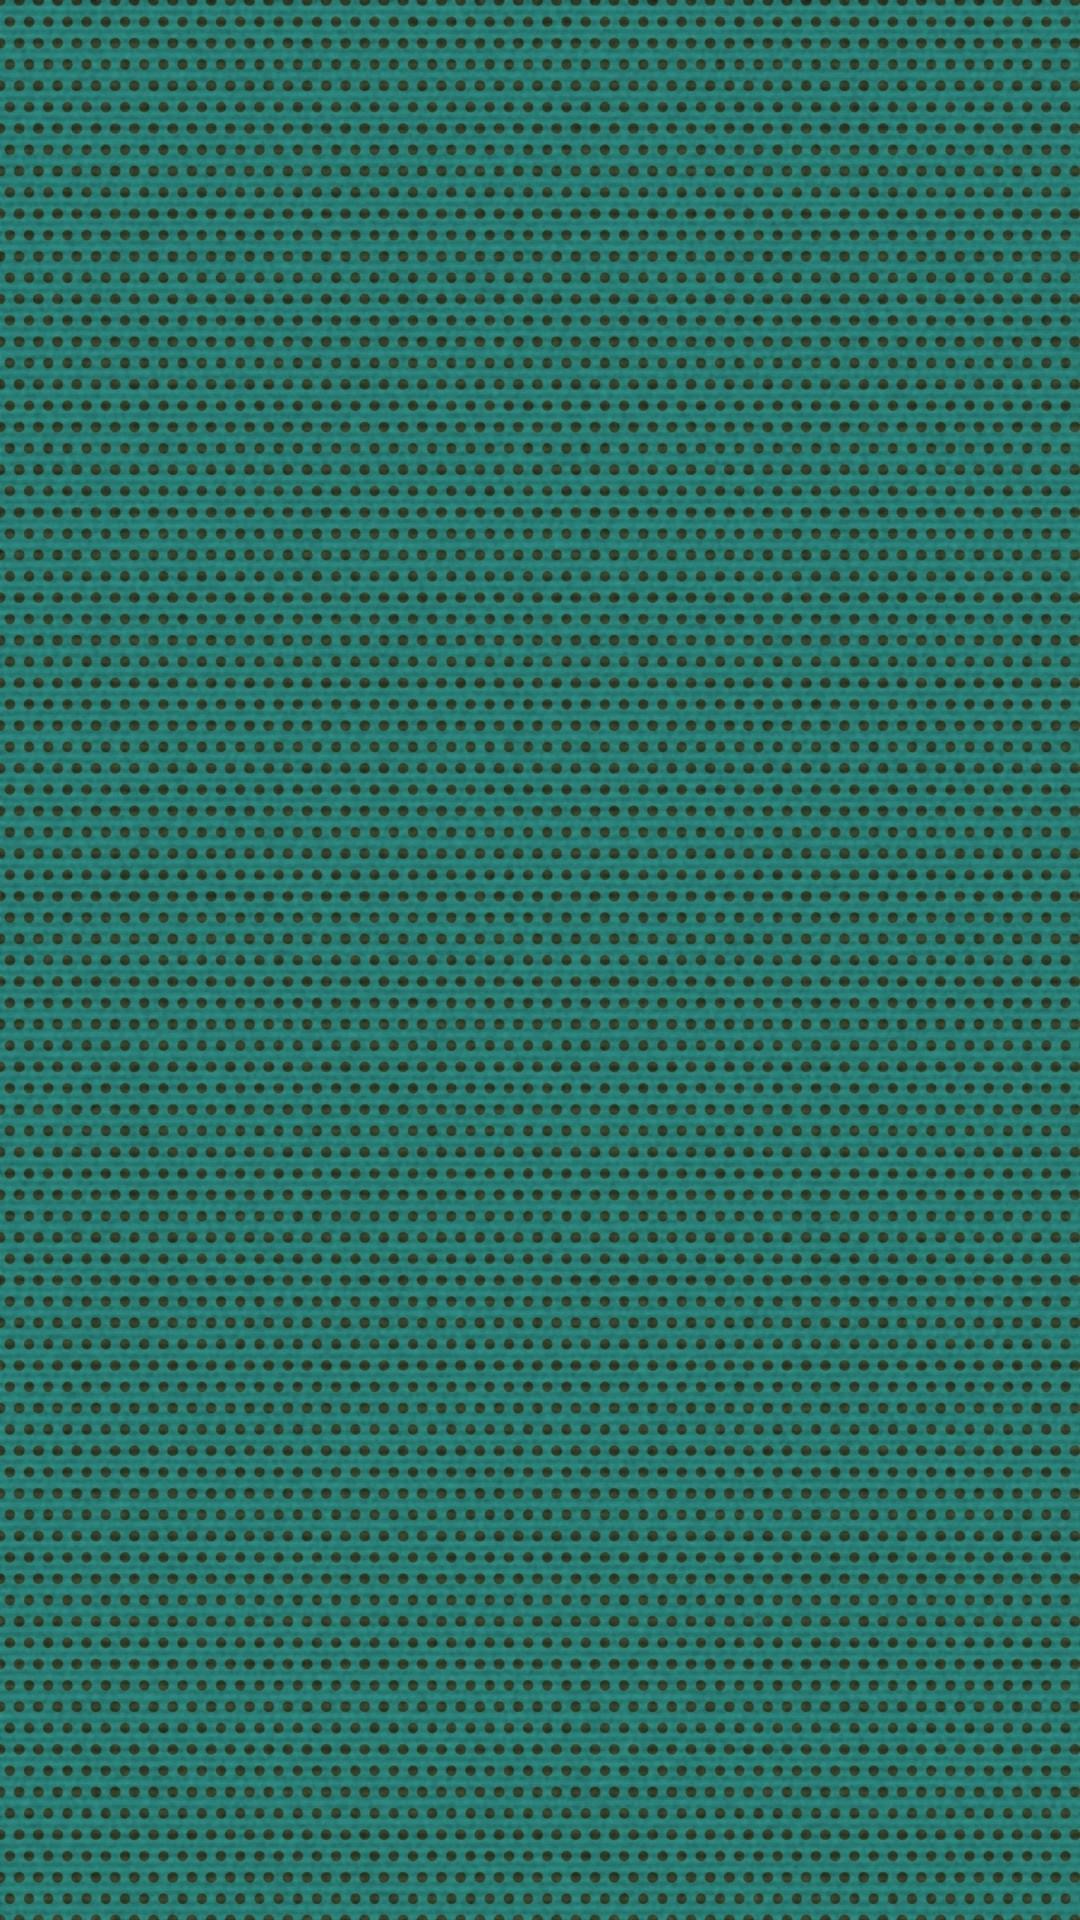 Mint Green iPhone Wallpaper